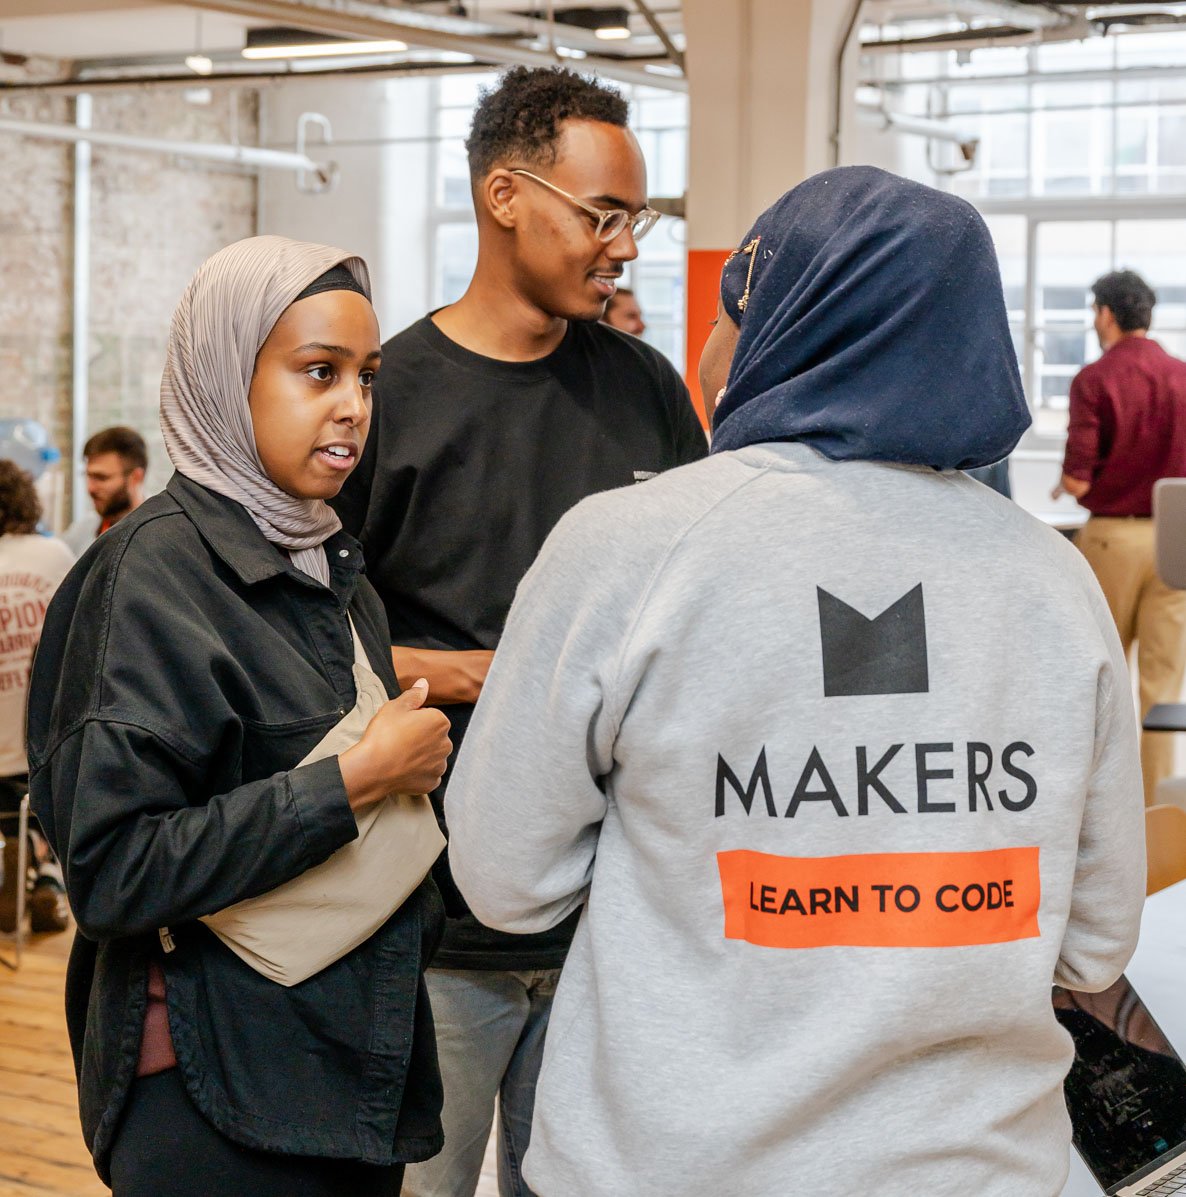 3 Makers talking, one wearing a Makers branded sweatshirt